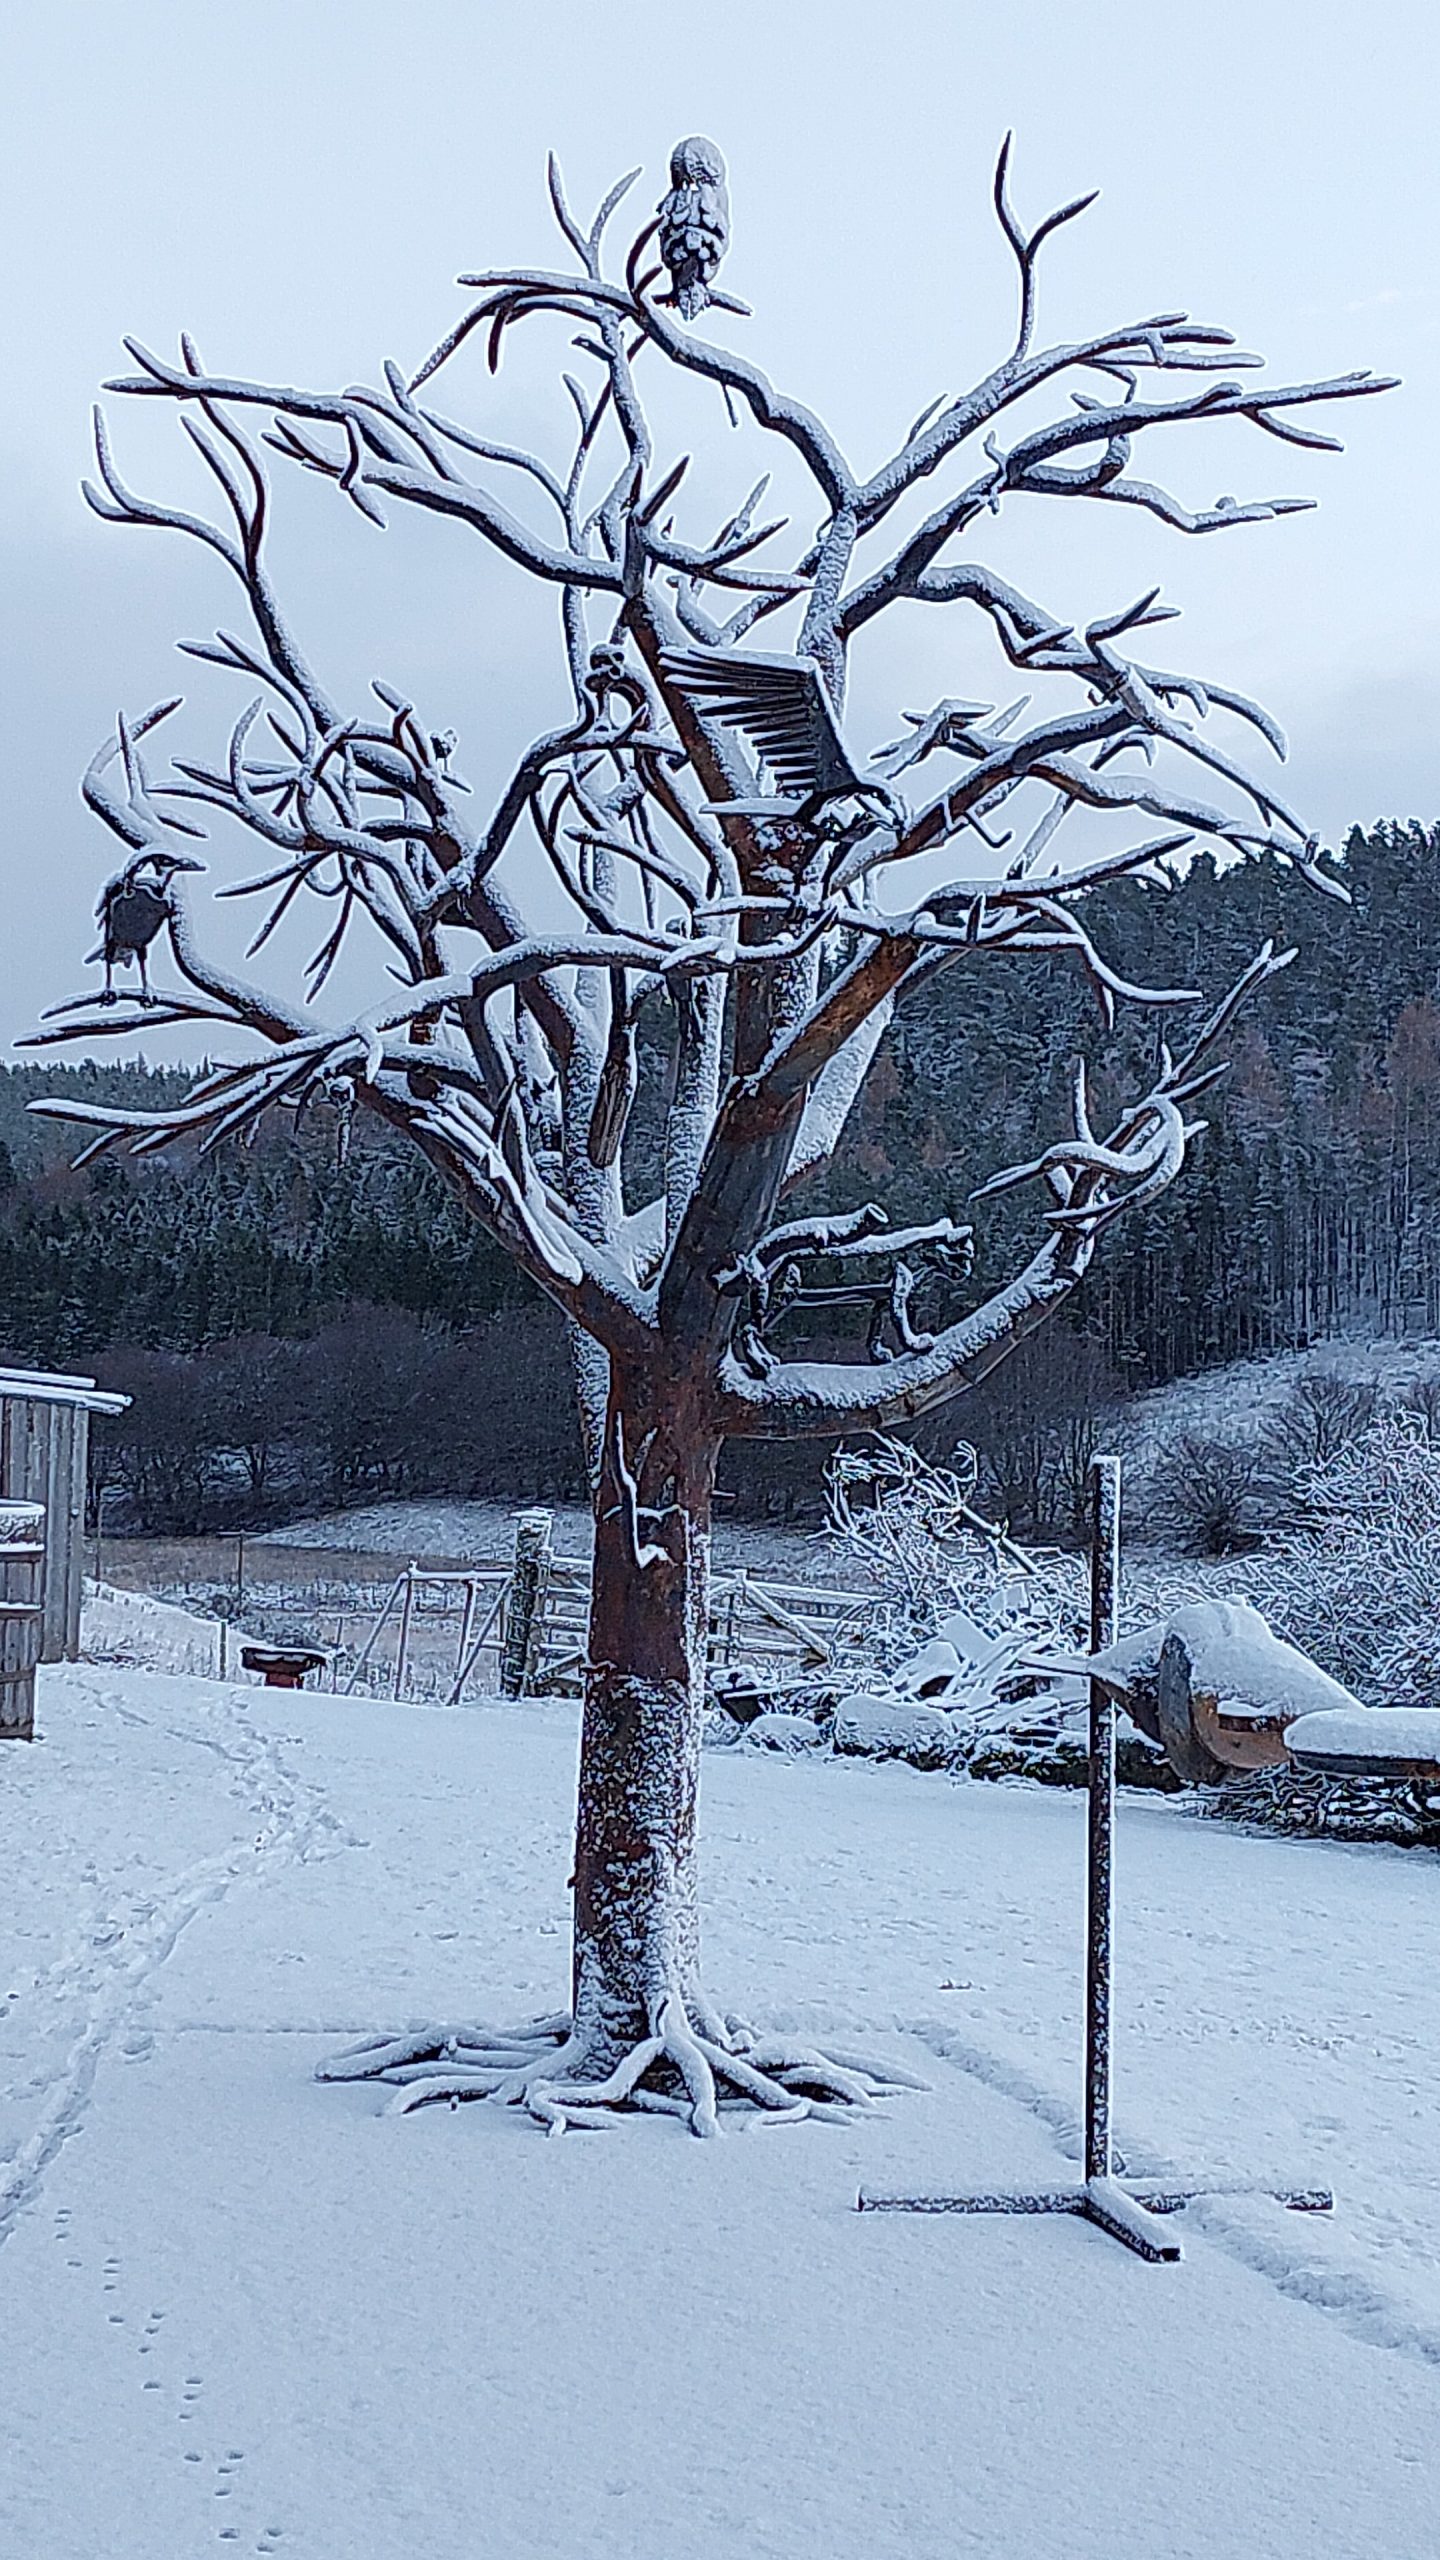 tree sculpture in snow